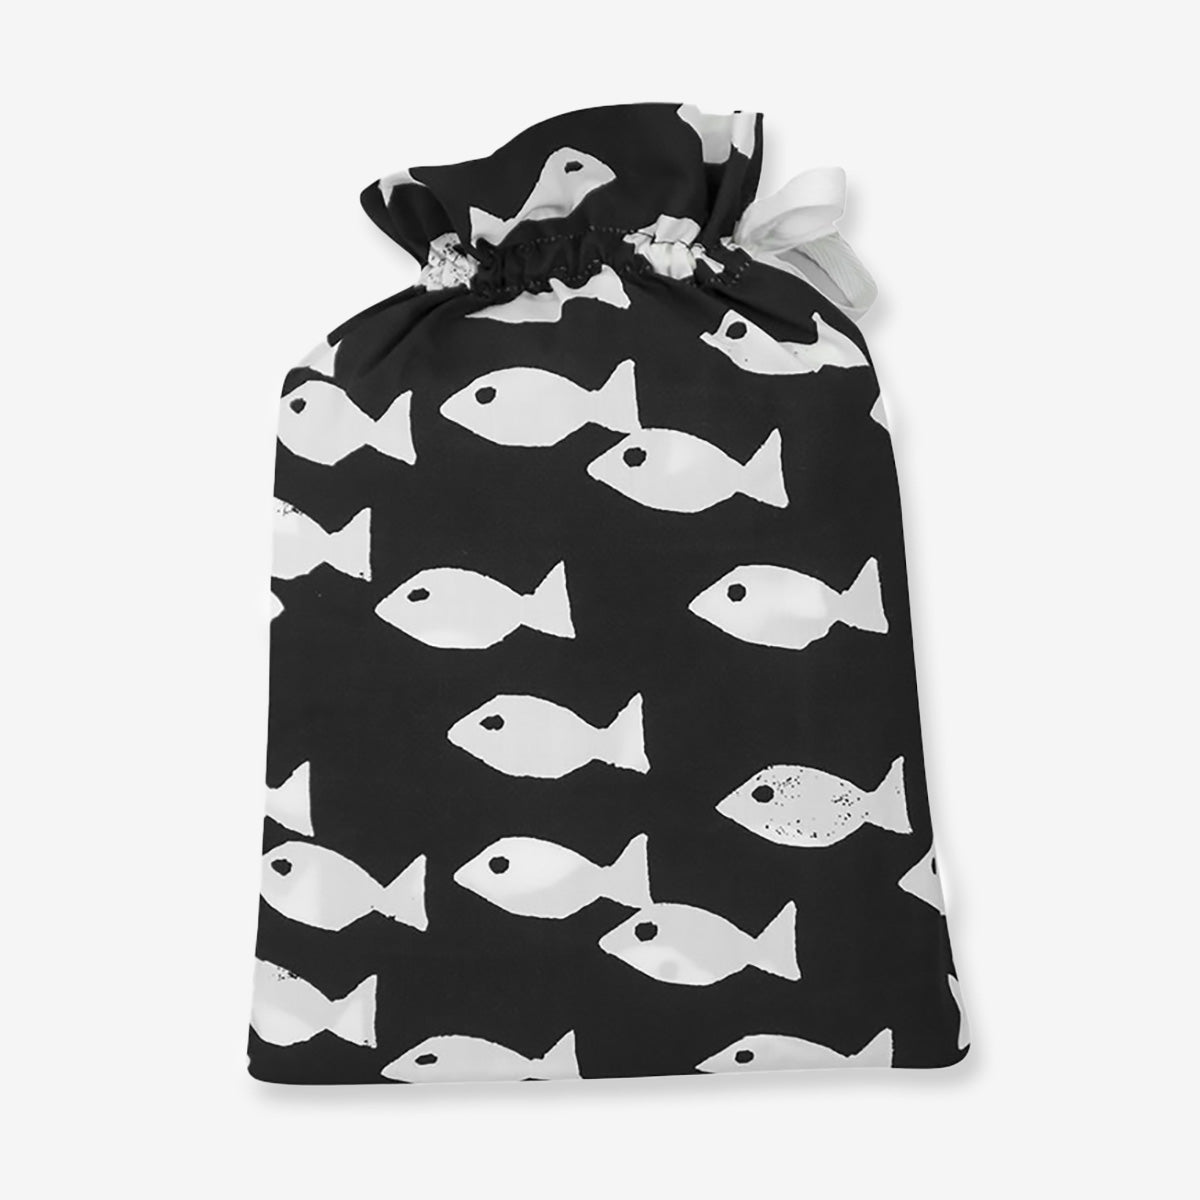 Fine Little Day Fish/Wave Cot Bed Bedding – Black